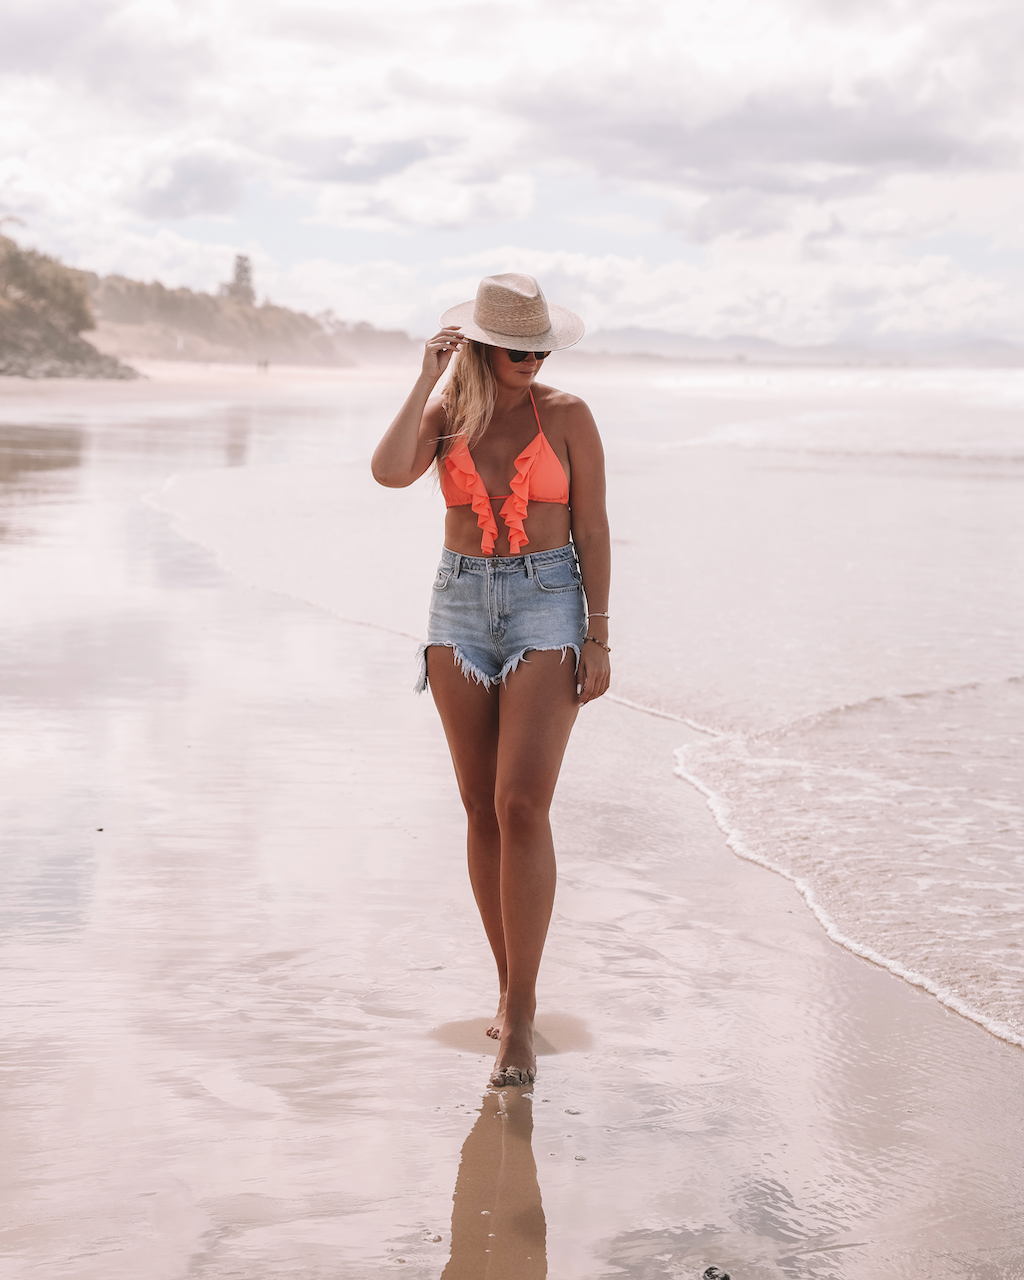 Blond woman in short and orange bikini at sunset - Belongil Beach - Byron Bay - New South Wales - Australia